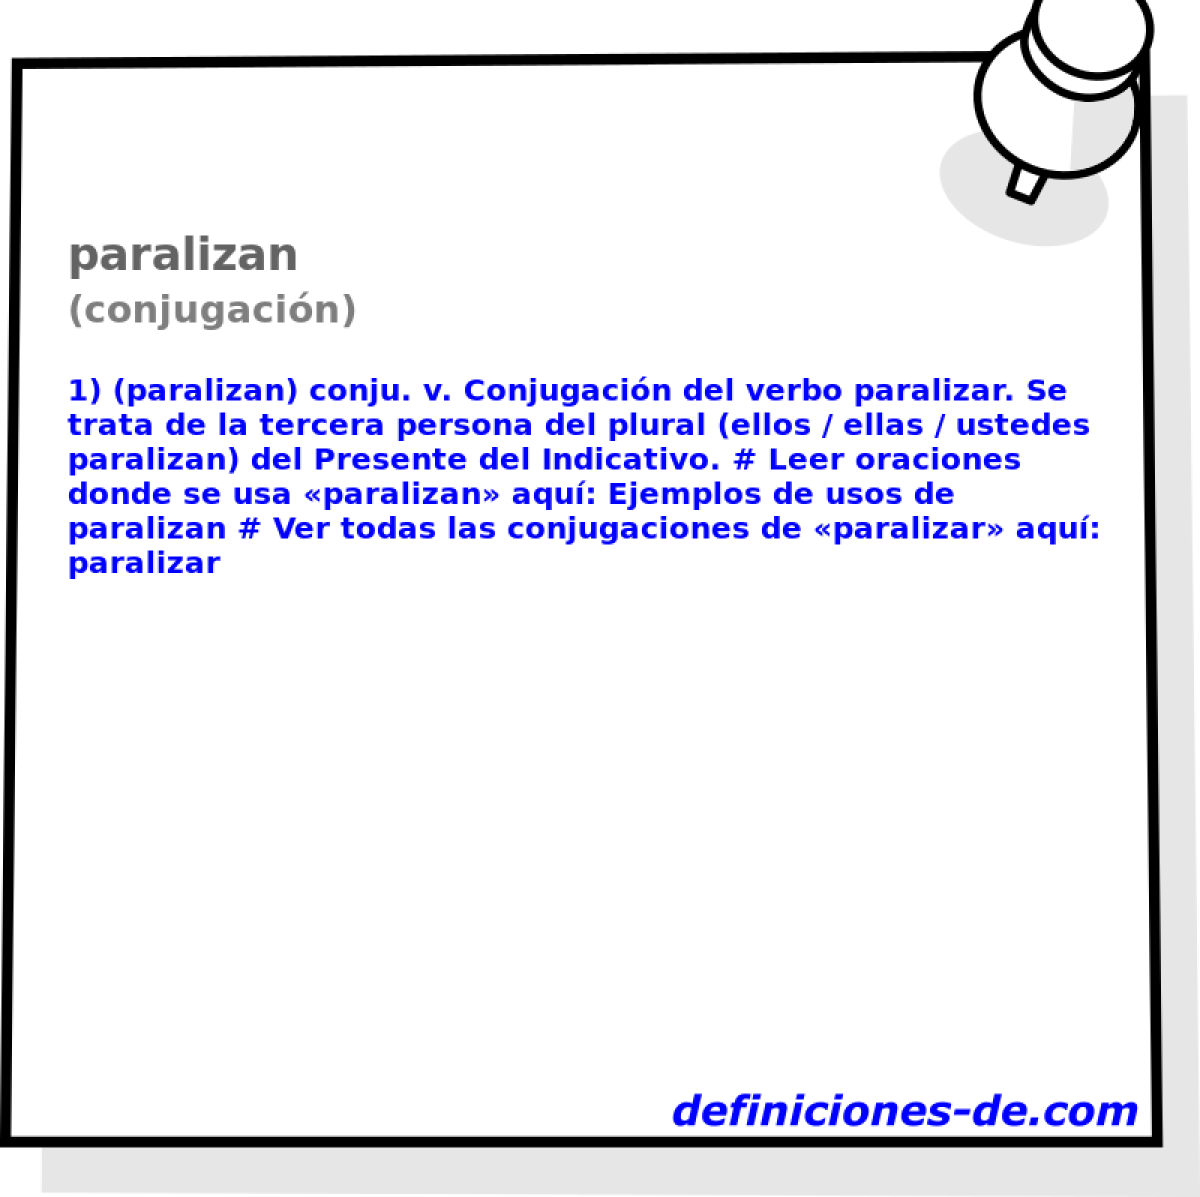 paralizan (conjugacin)